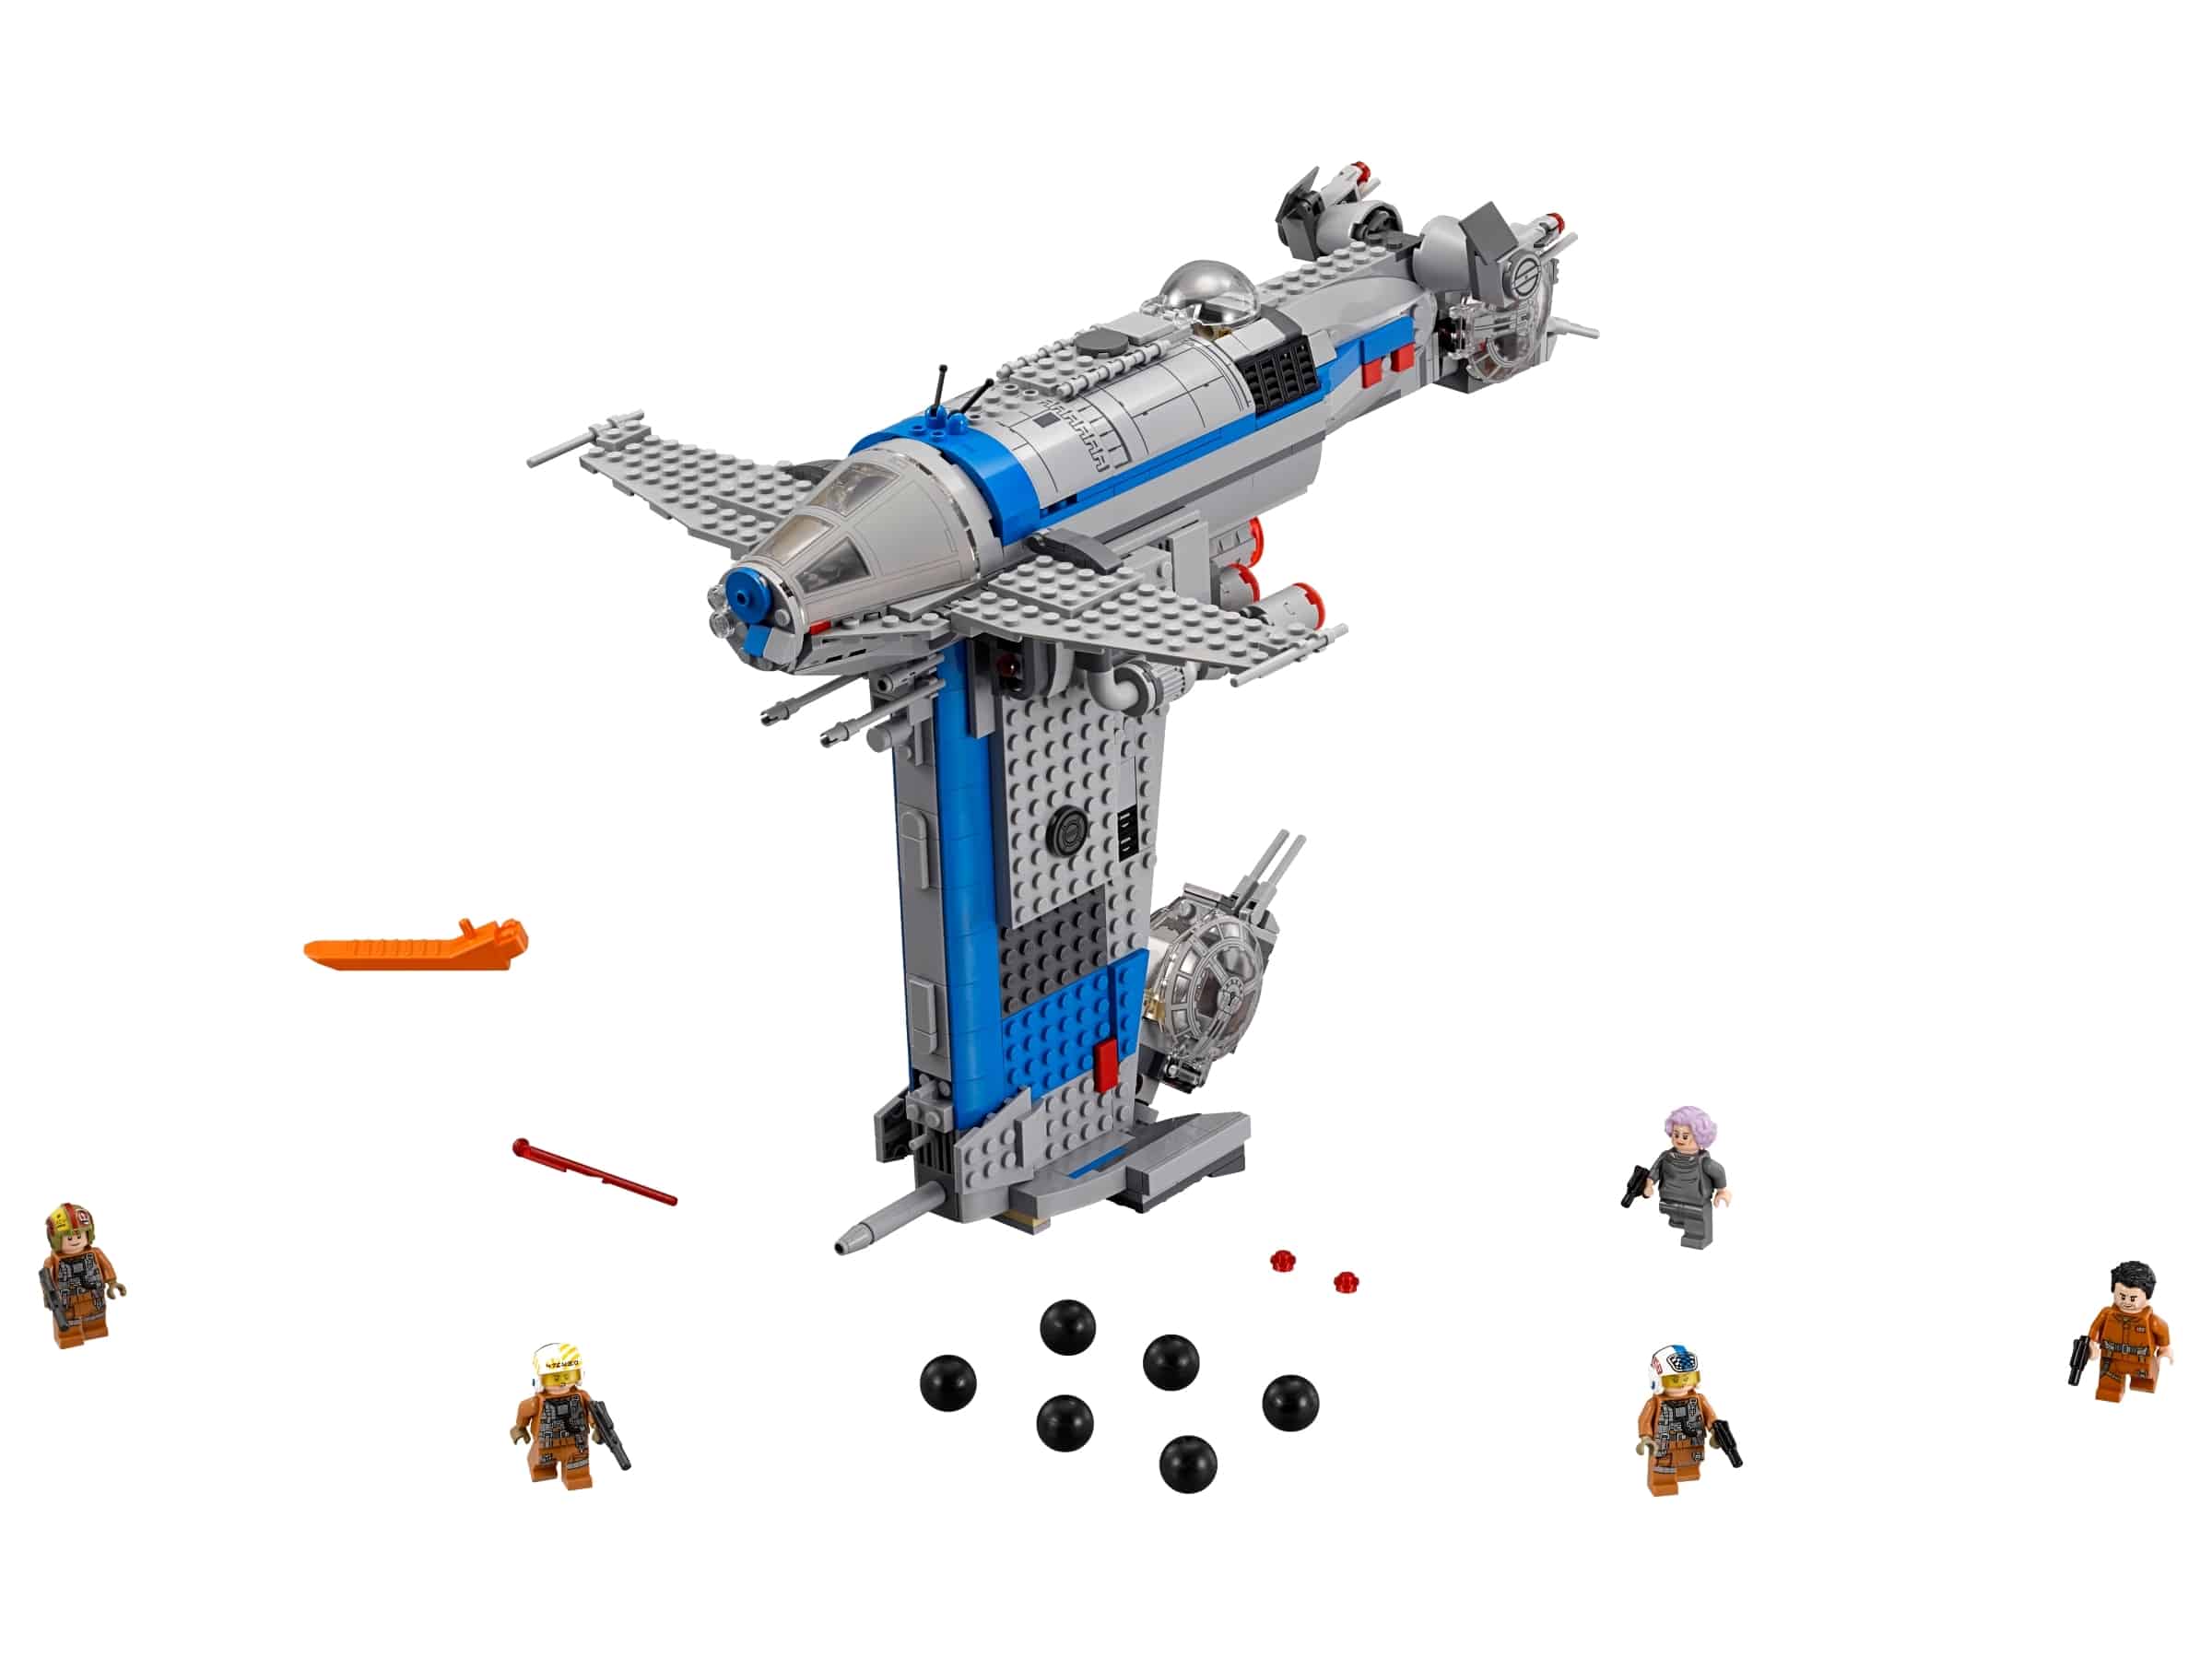 Lego Verzetsbommenwerper 75188